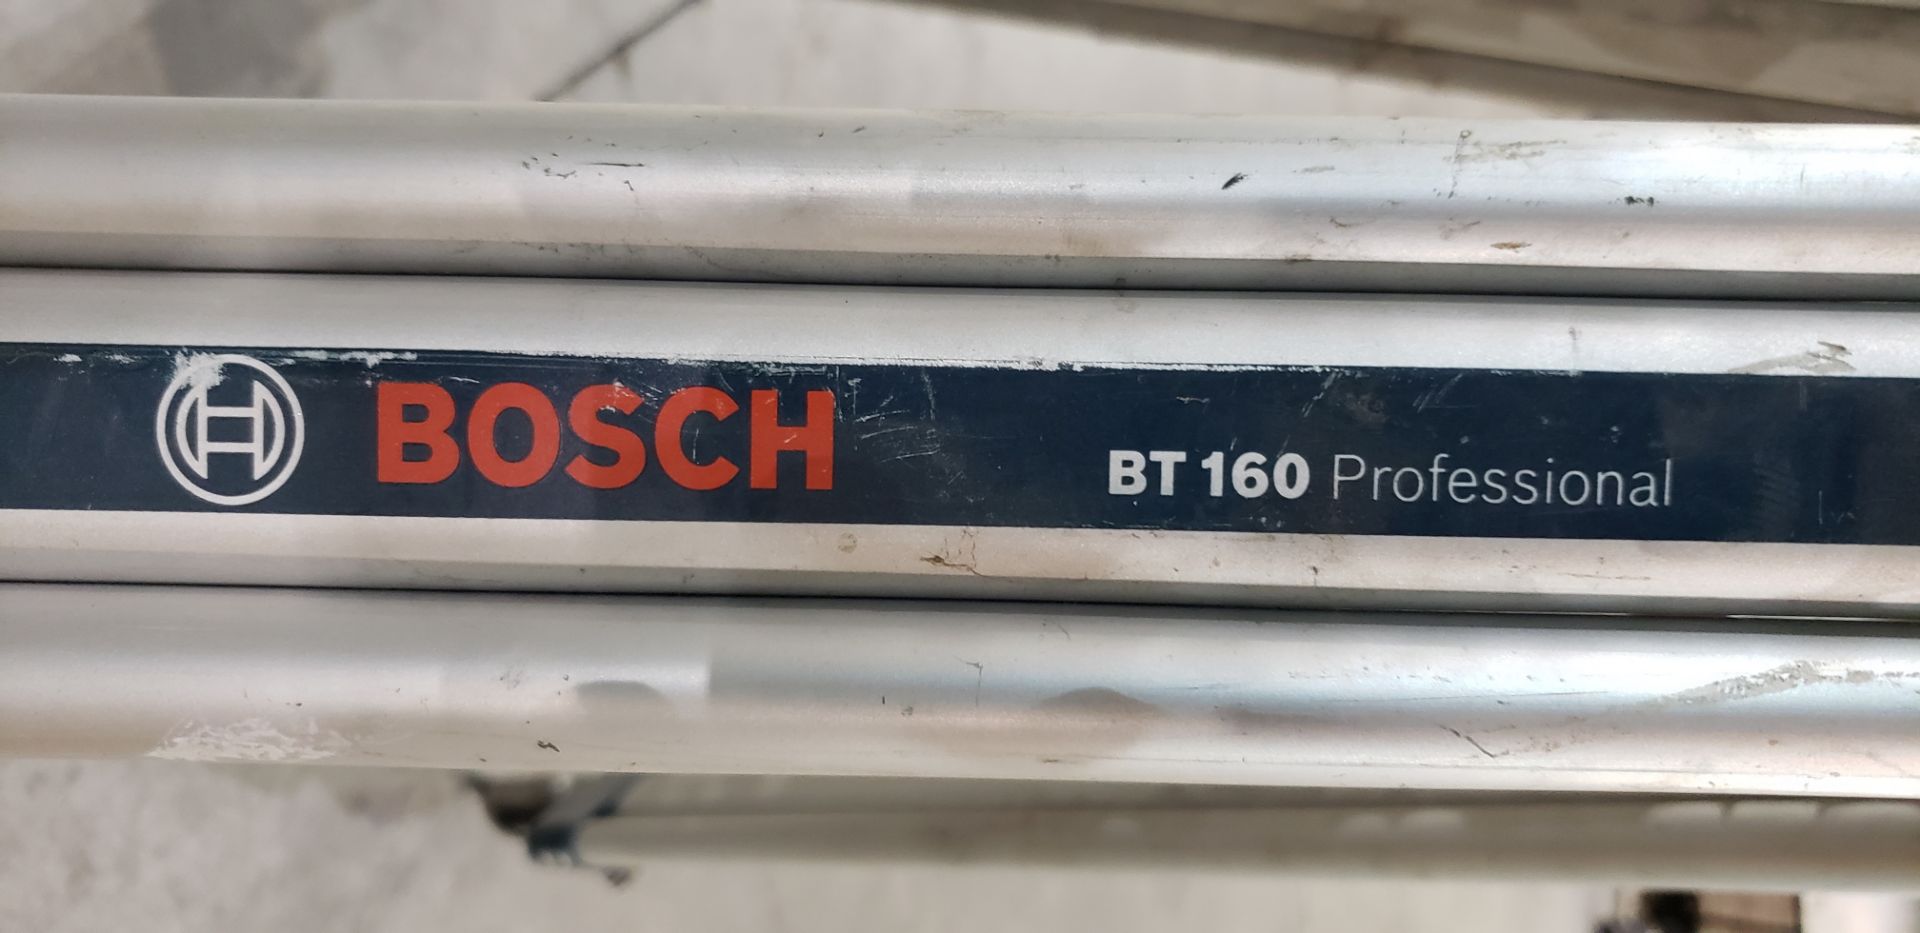 Bosch BT 160 Tripod - Image 2 of 2